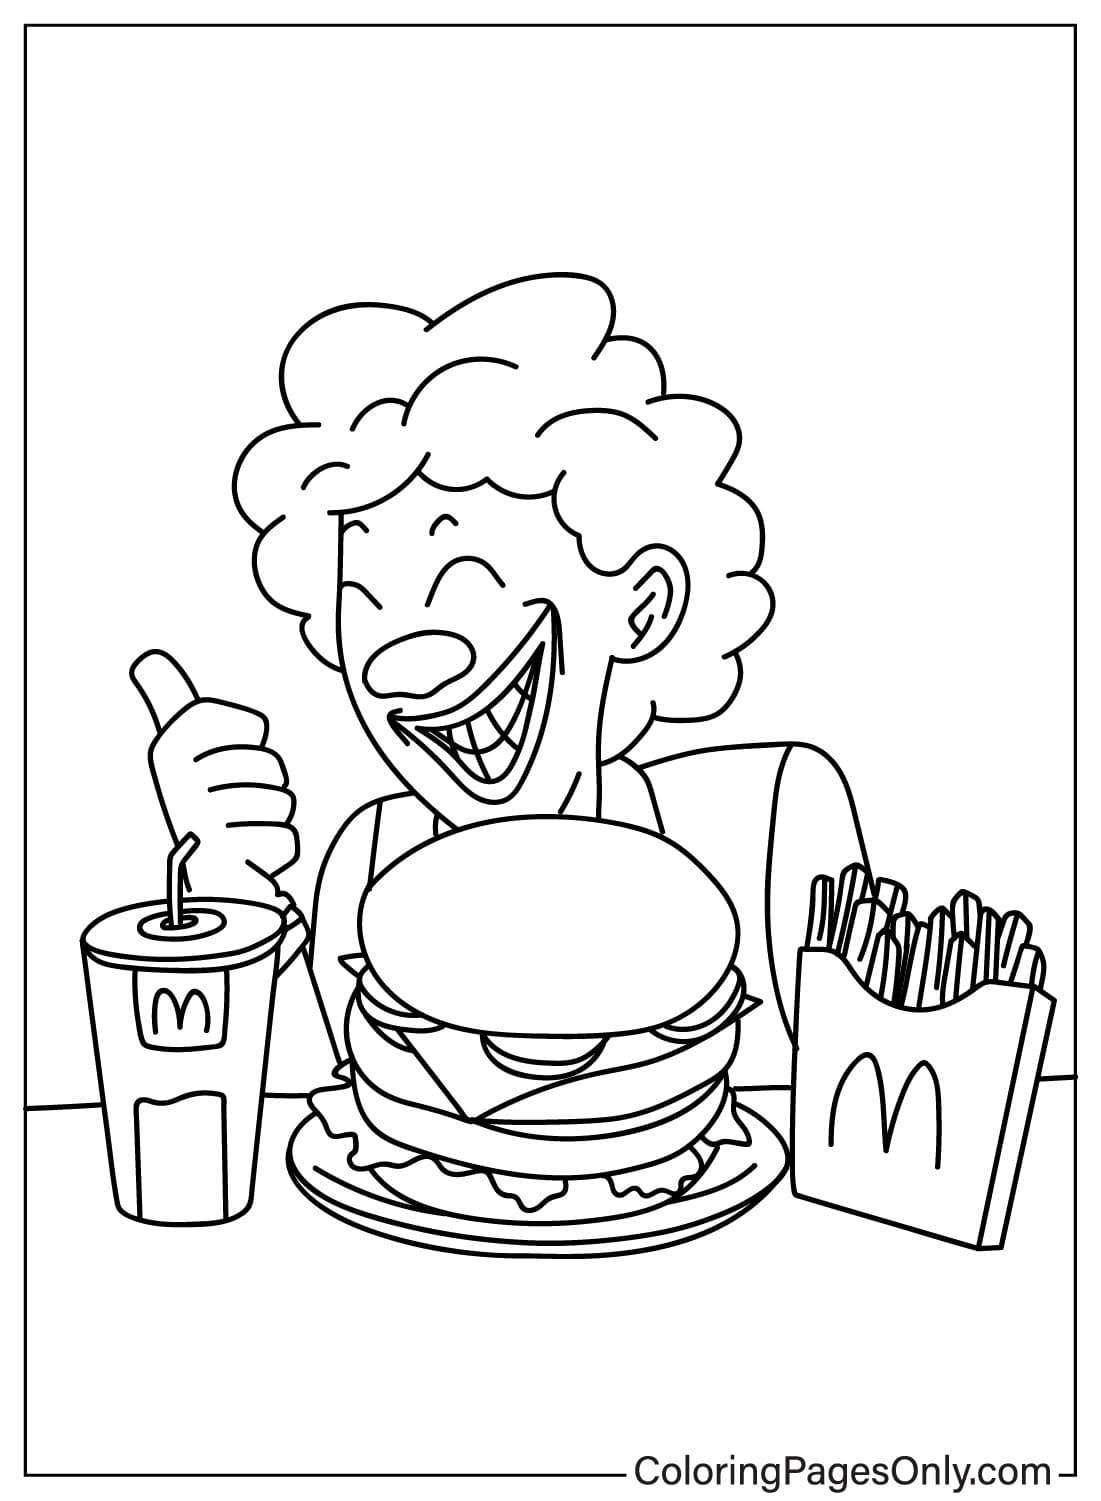 Página para colorir do McDonalds do McDonald's